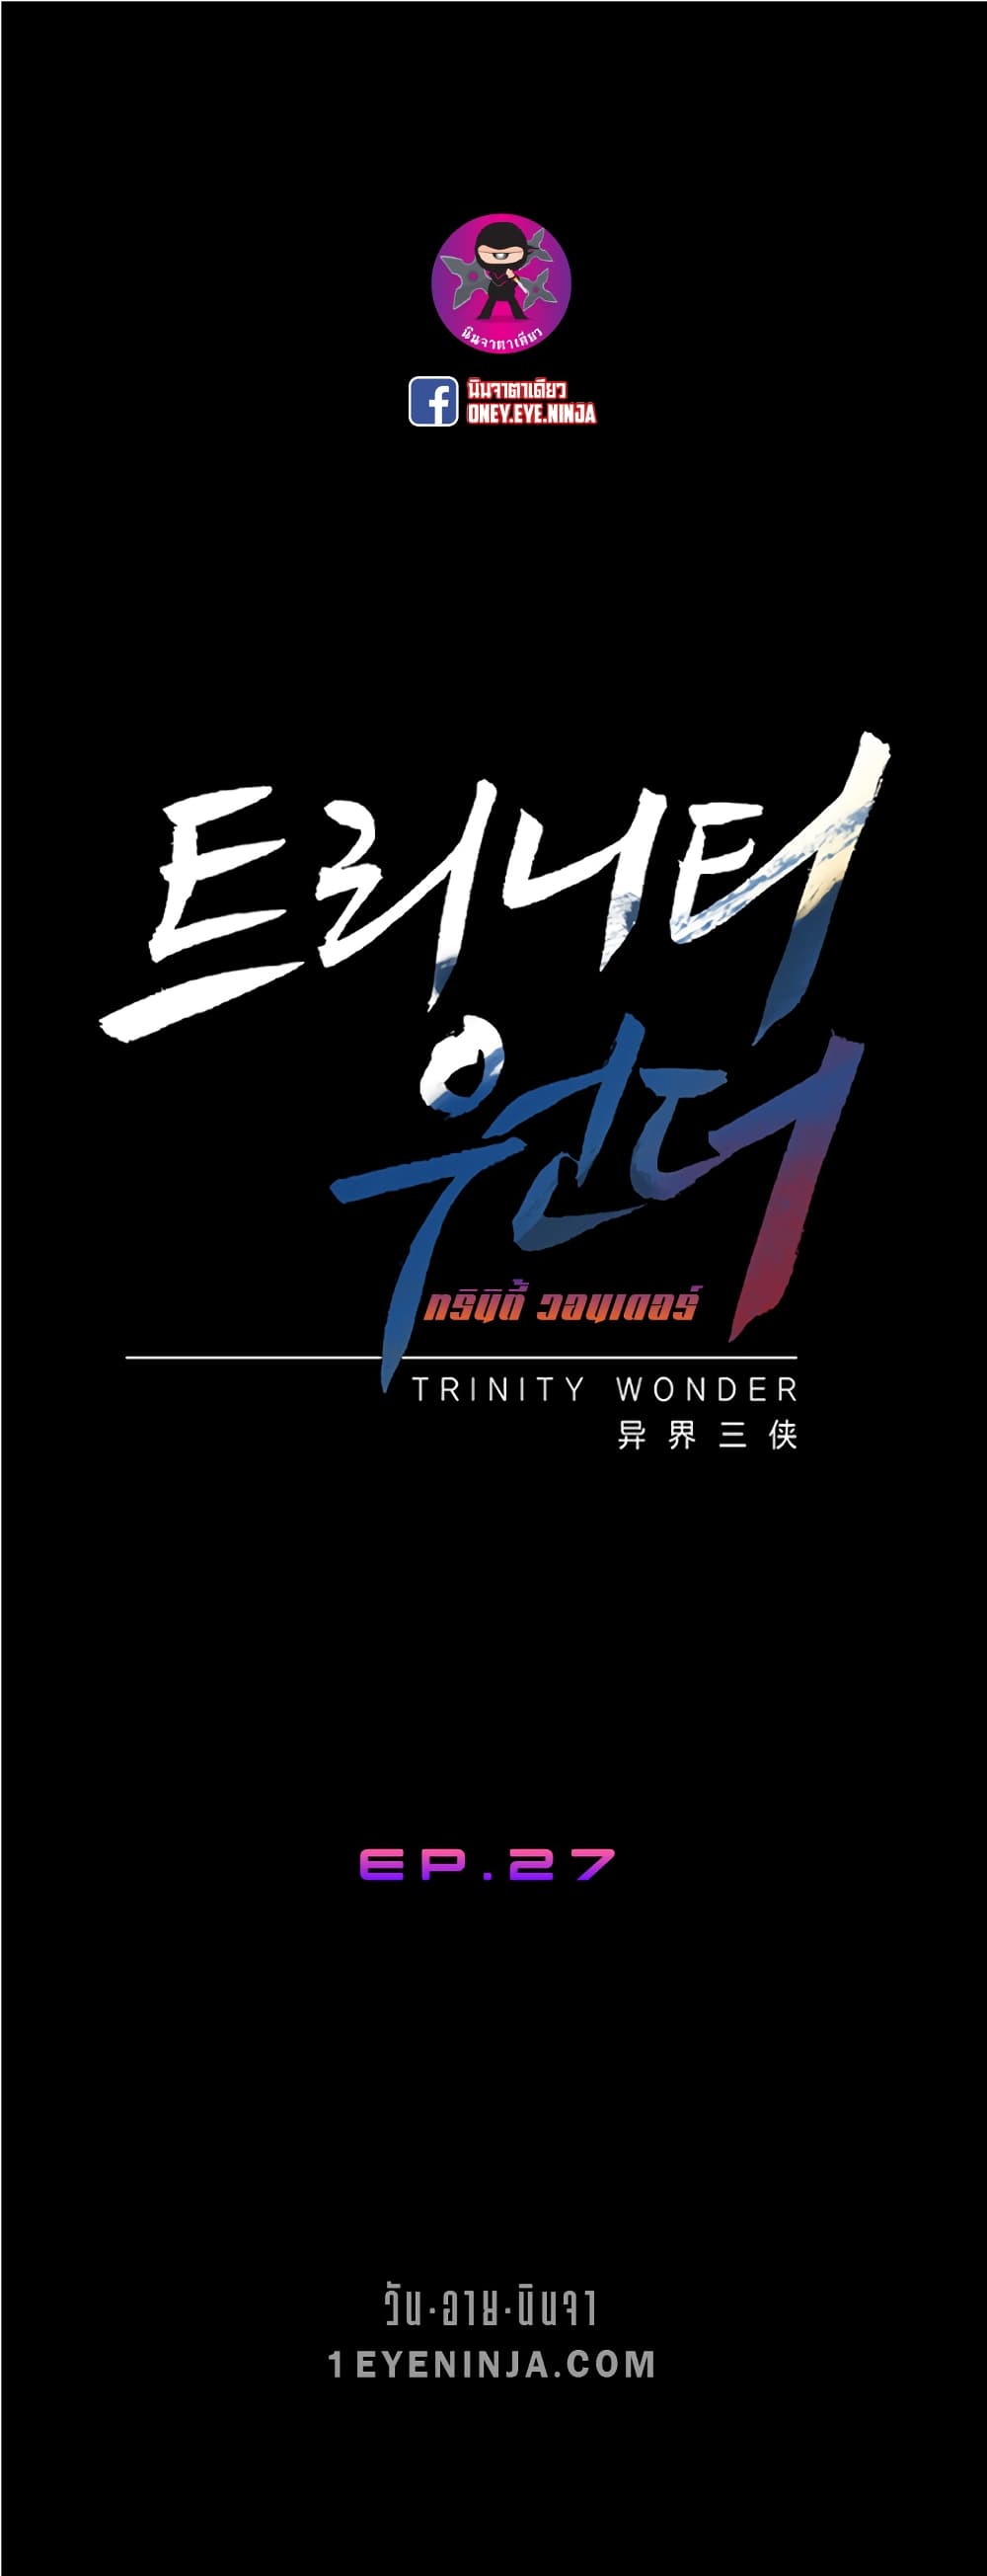 Trinity Wonder 27 (2)